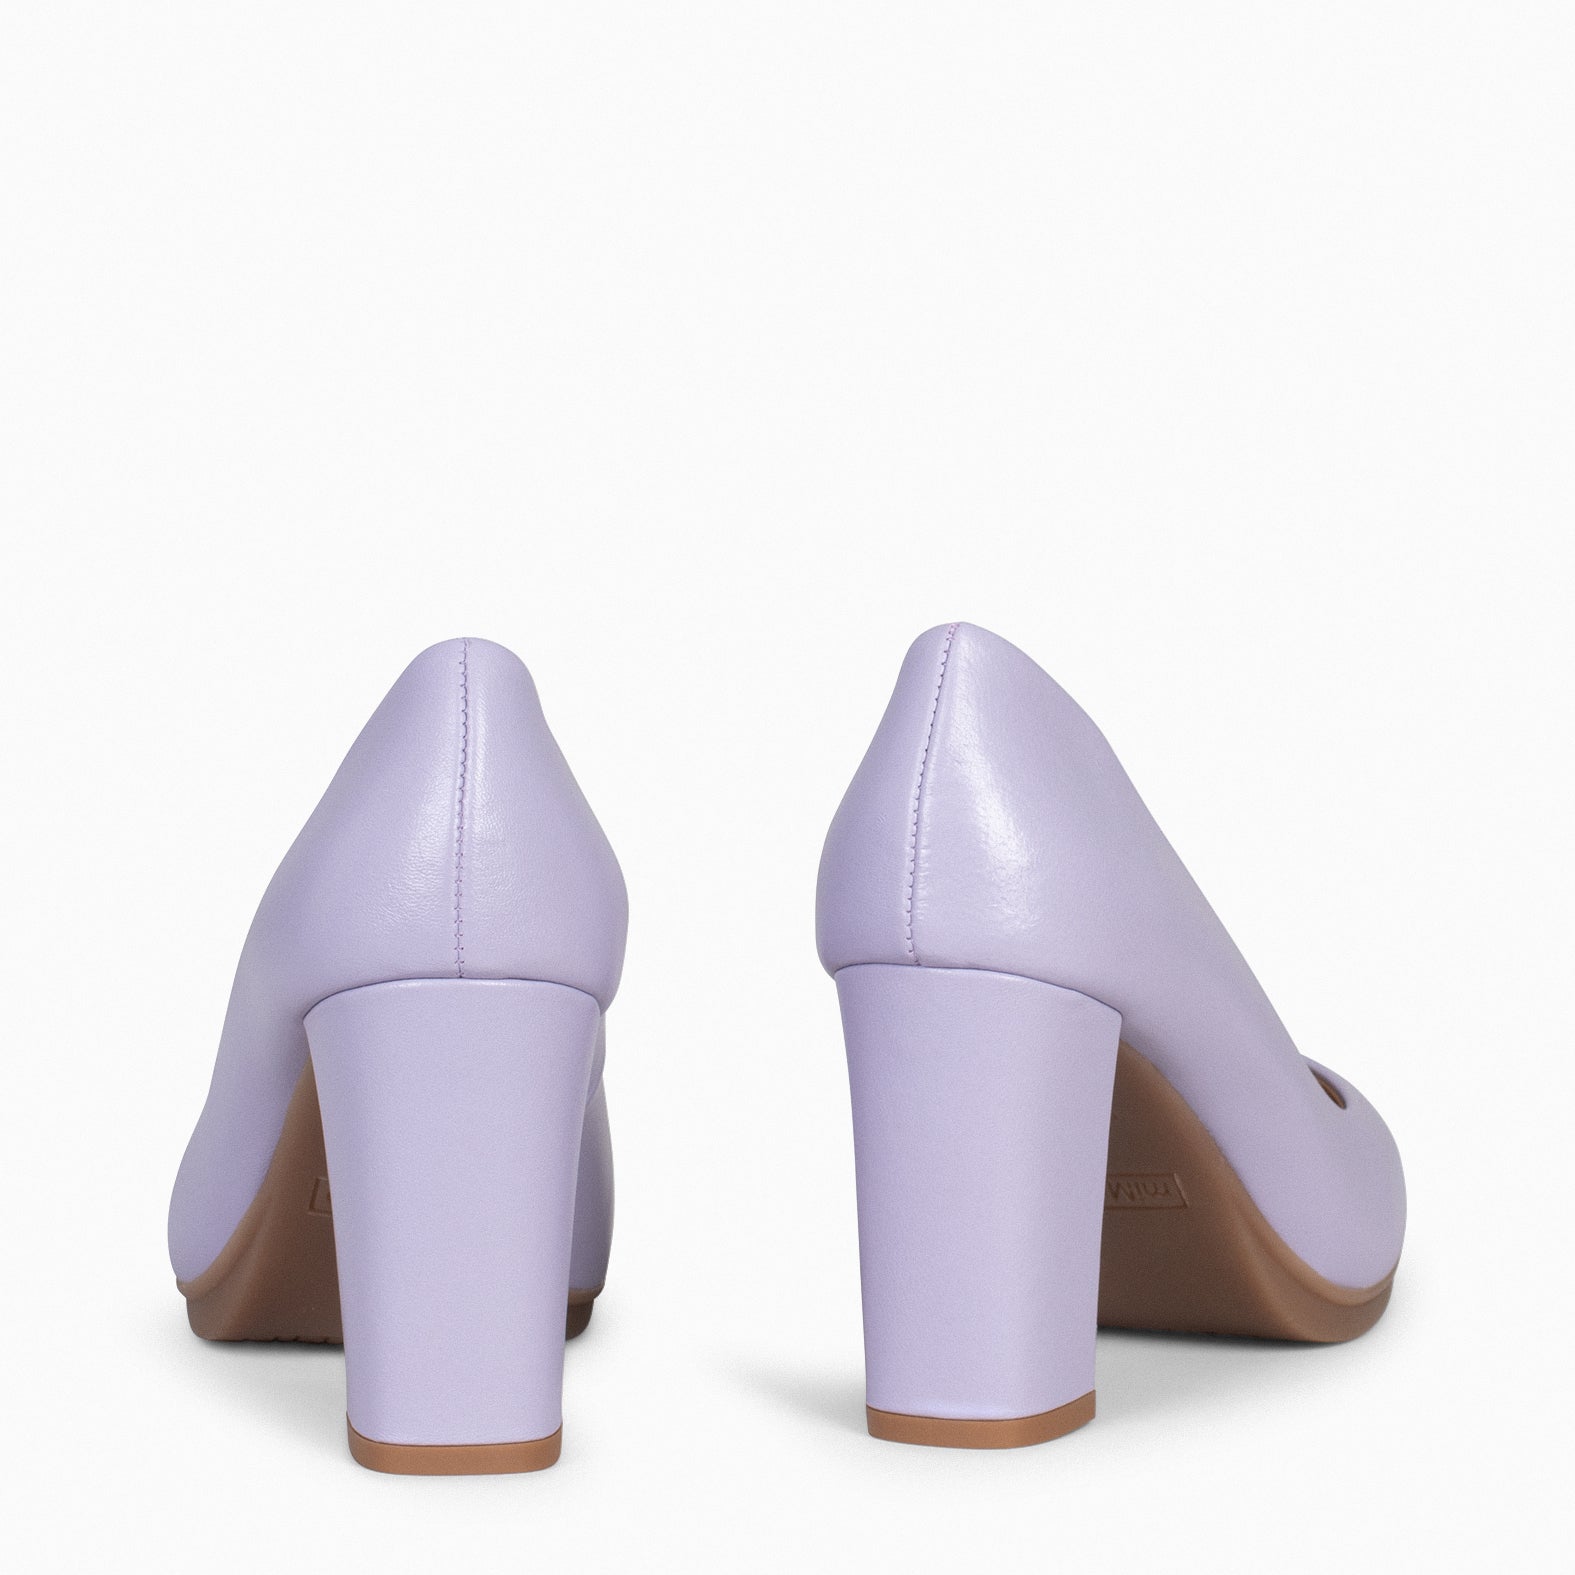 URBAN SALON – LILAC nappa leather high heel